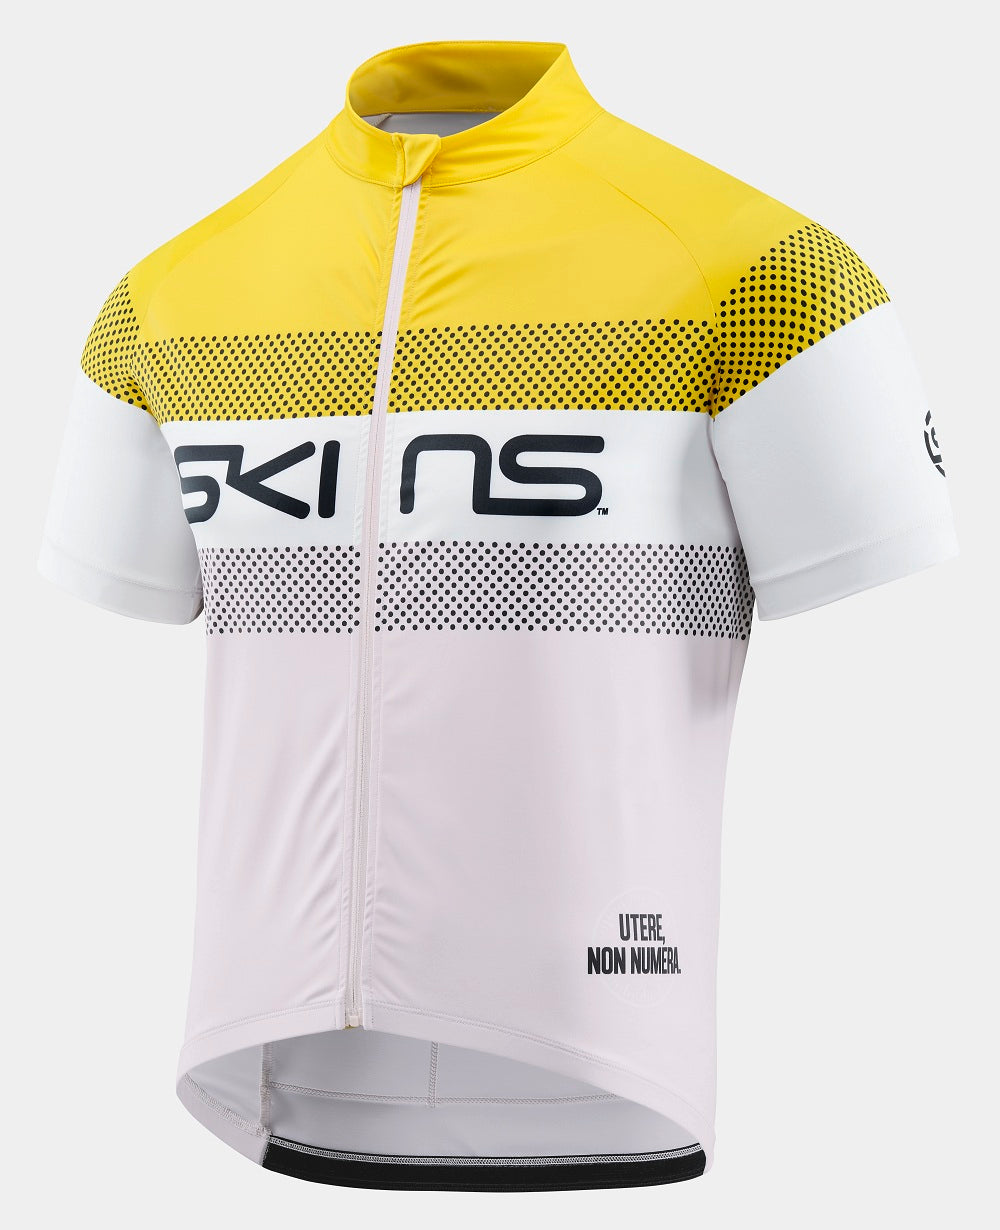 Skins Men's Cycle Branded Jersey - Zest/Granite/White